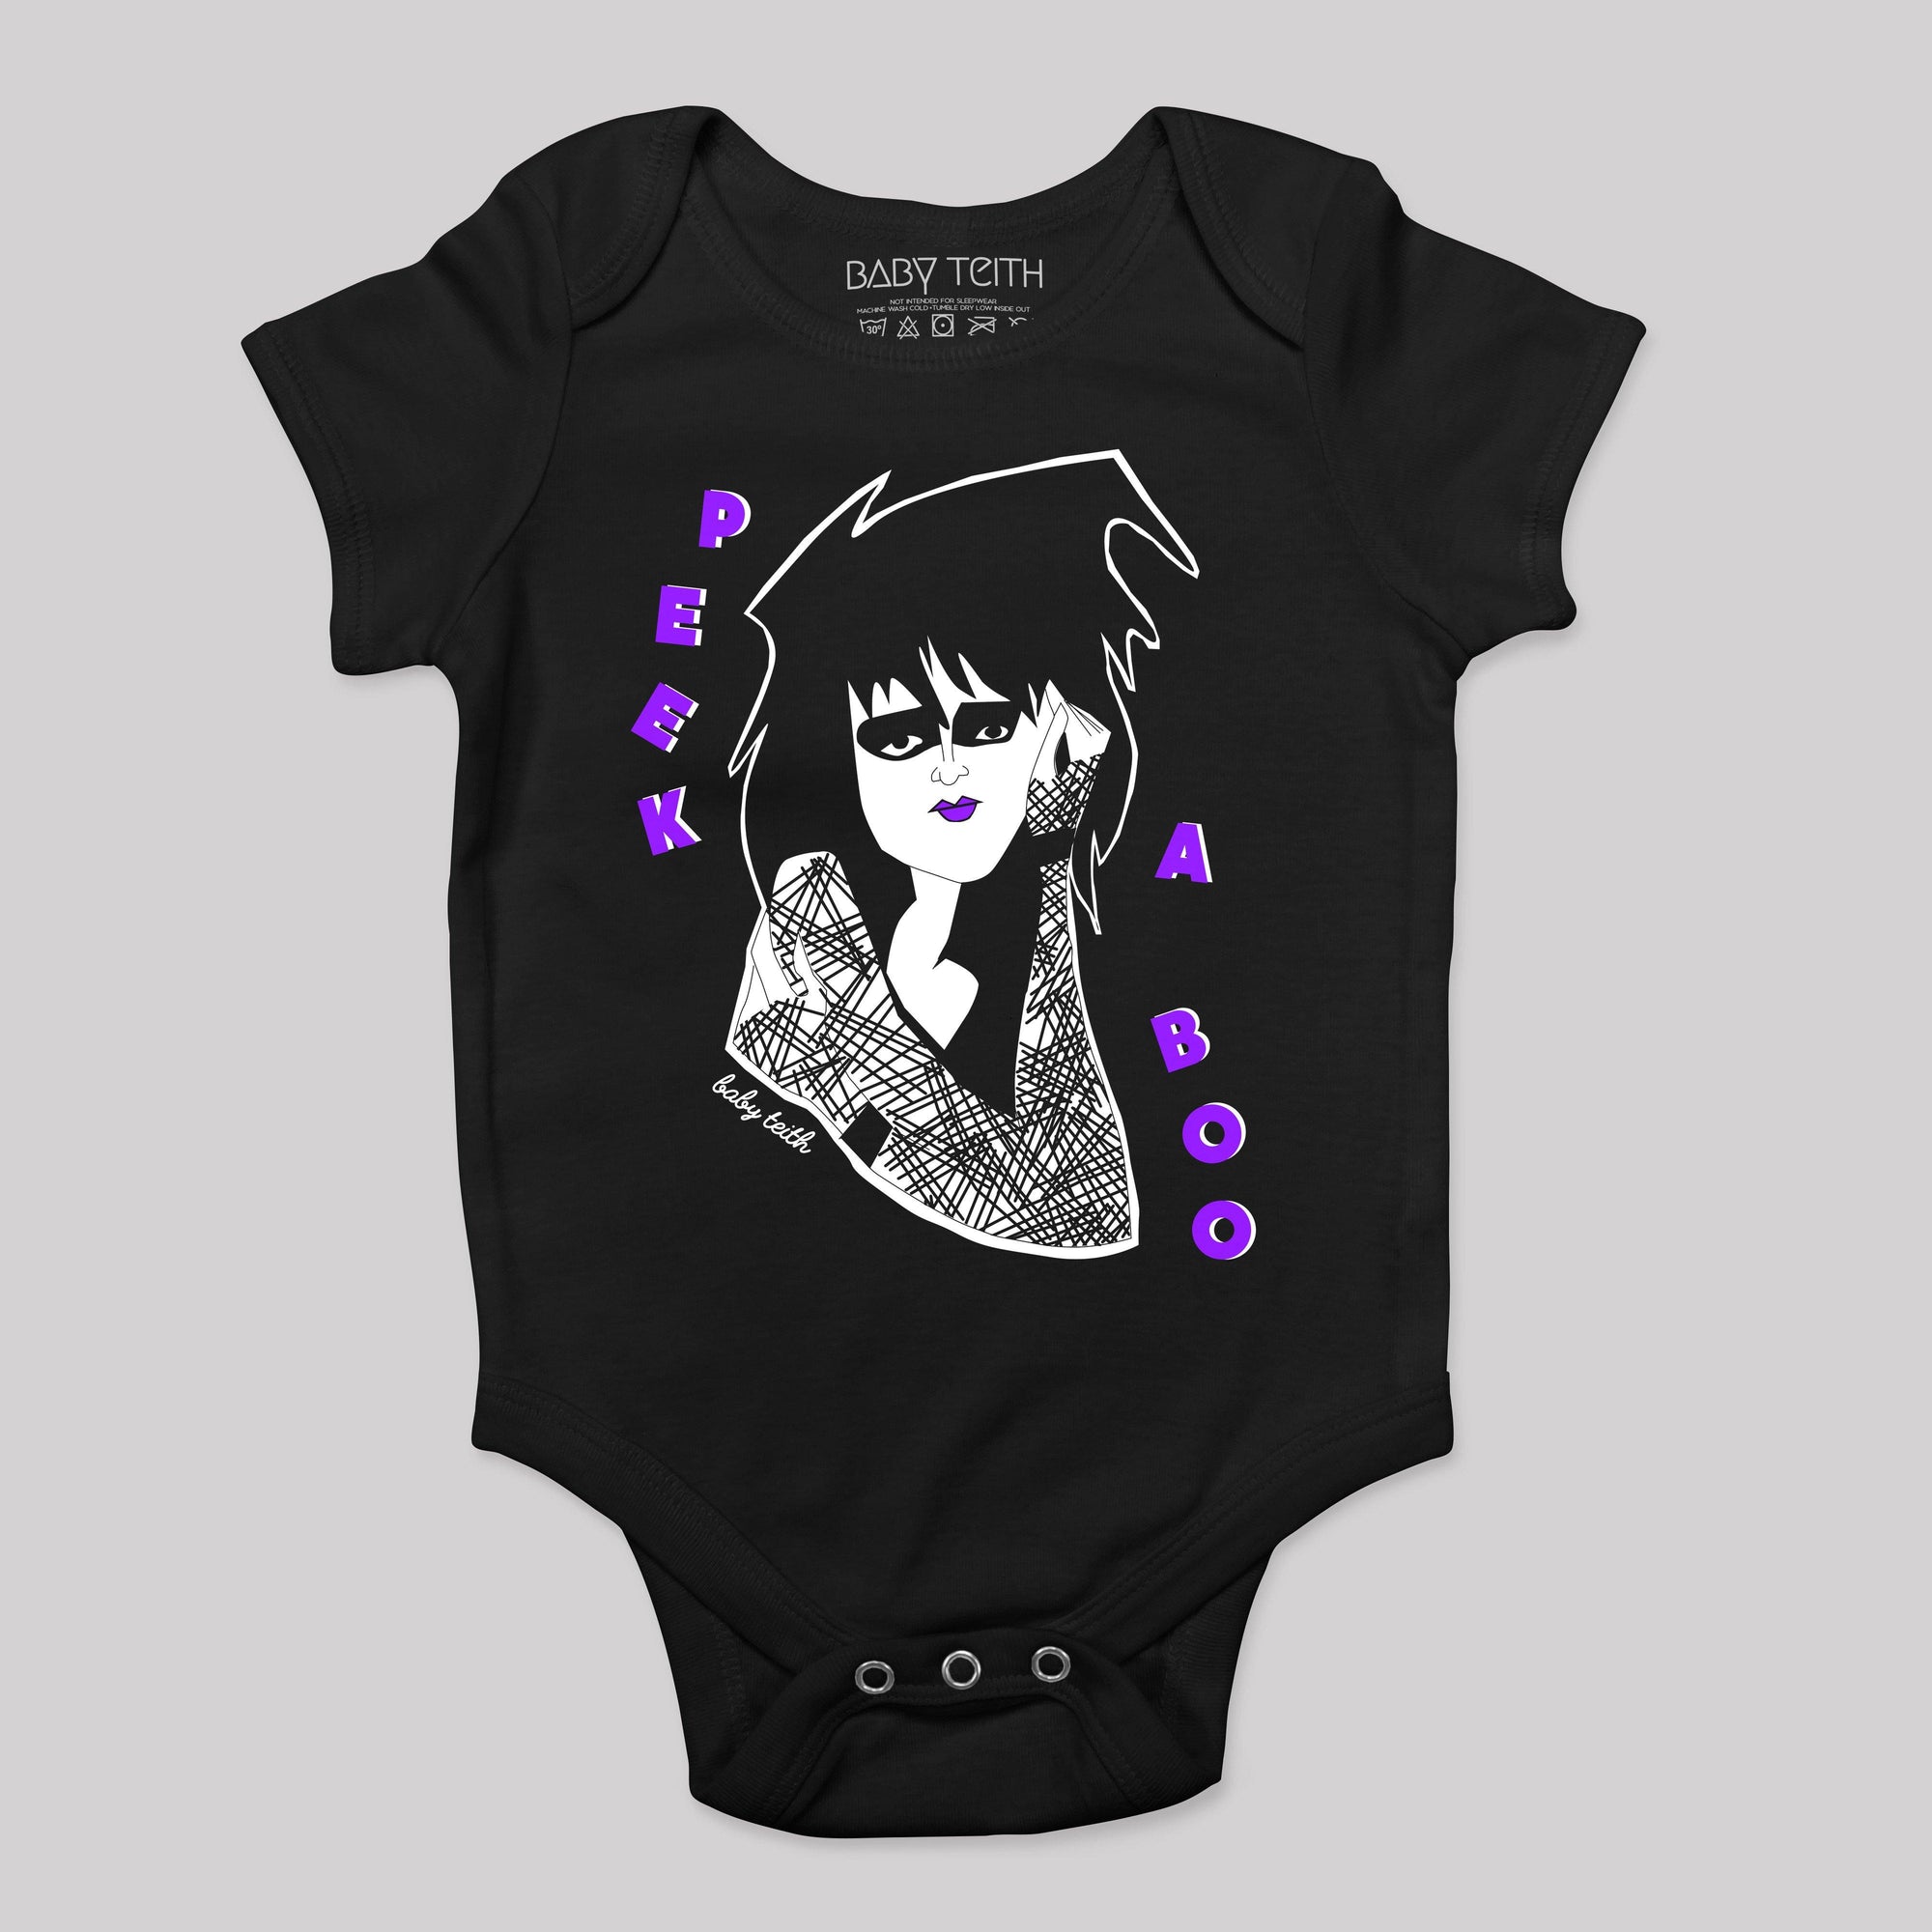 "Peek-a-boo" Bodysuit for Babies - Baby Teith